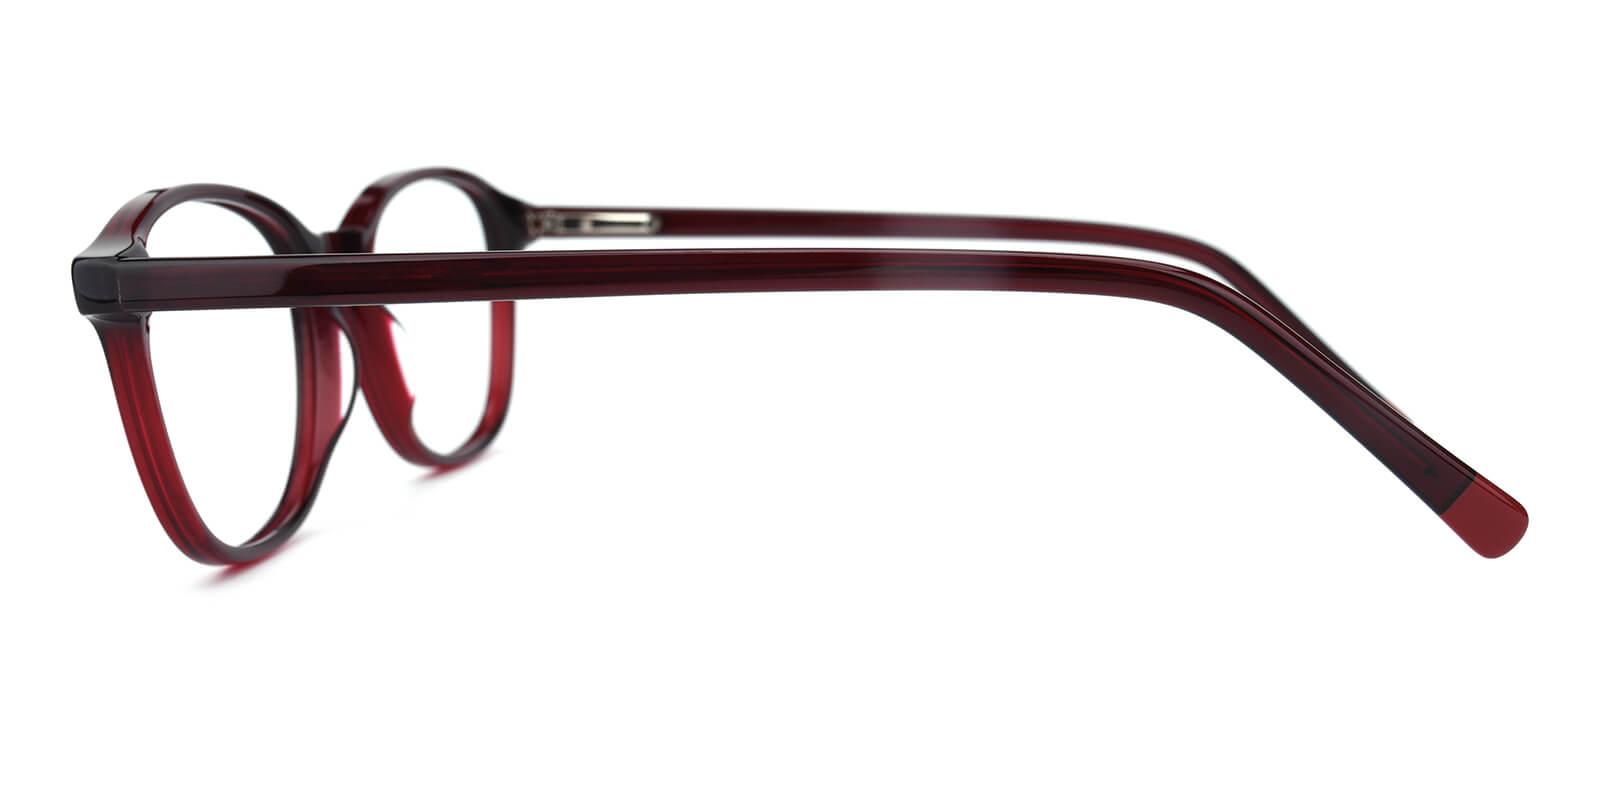 Grunei-Brown-Square-Acetate-Eyeglasses-detail